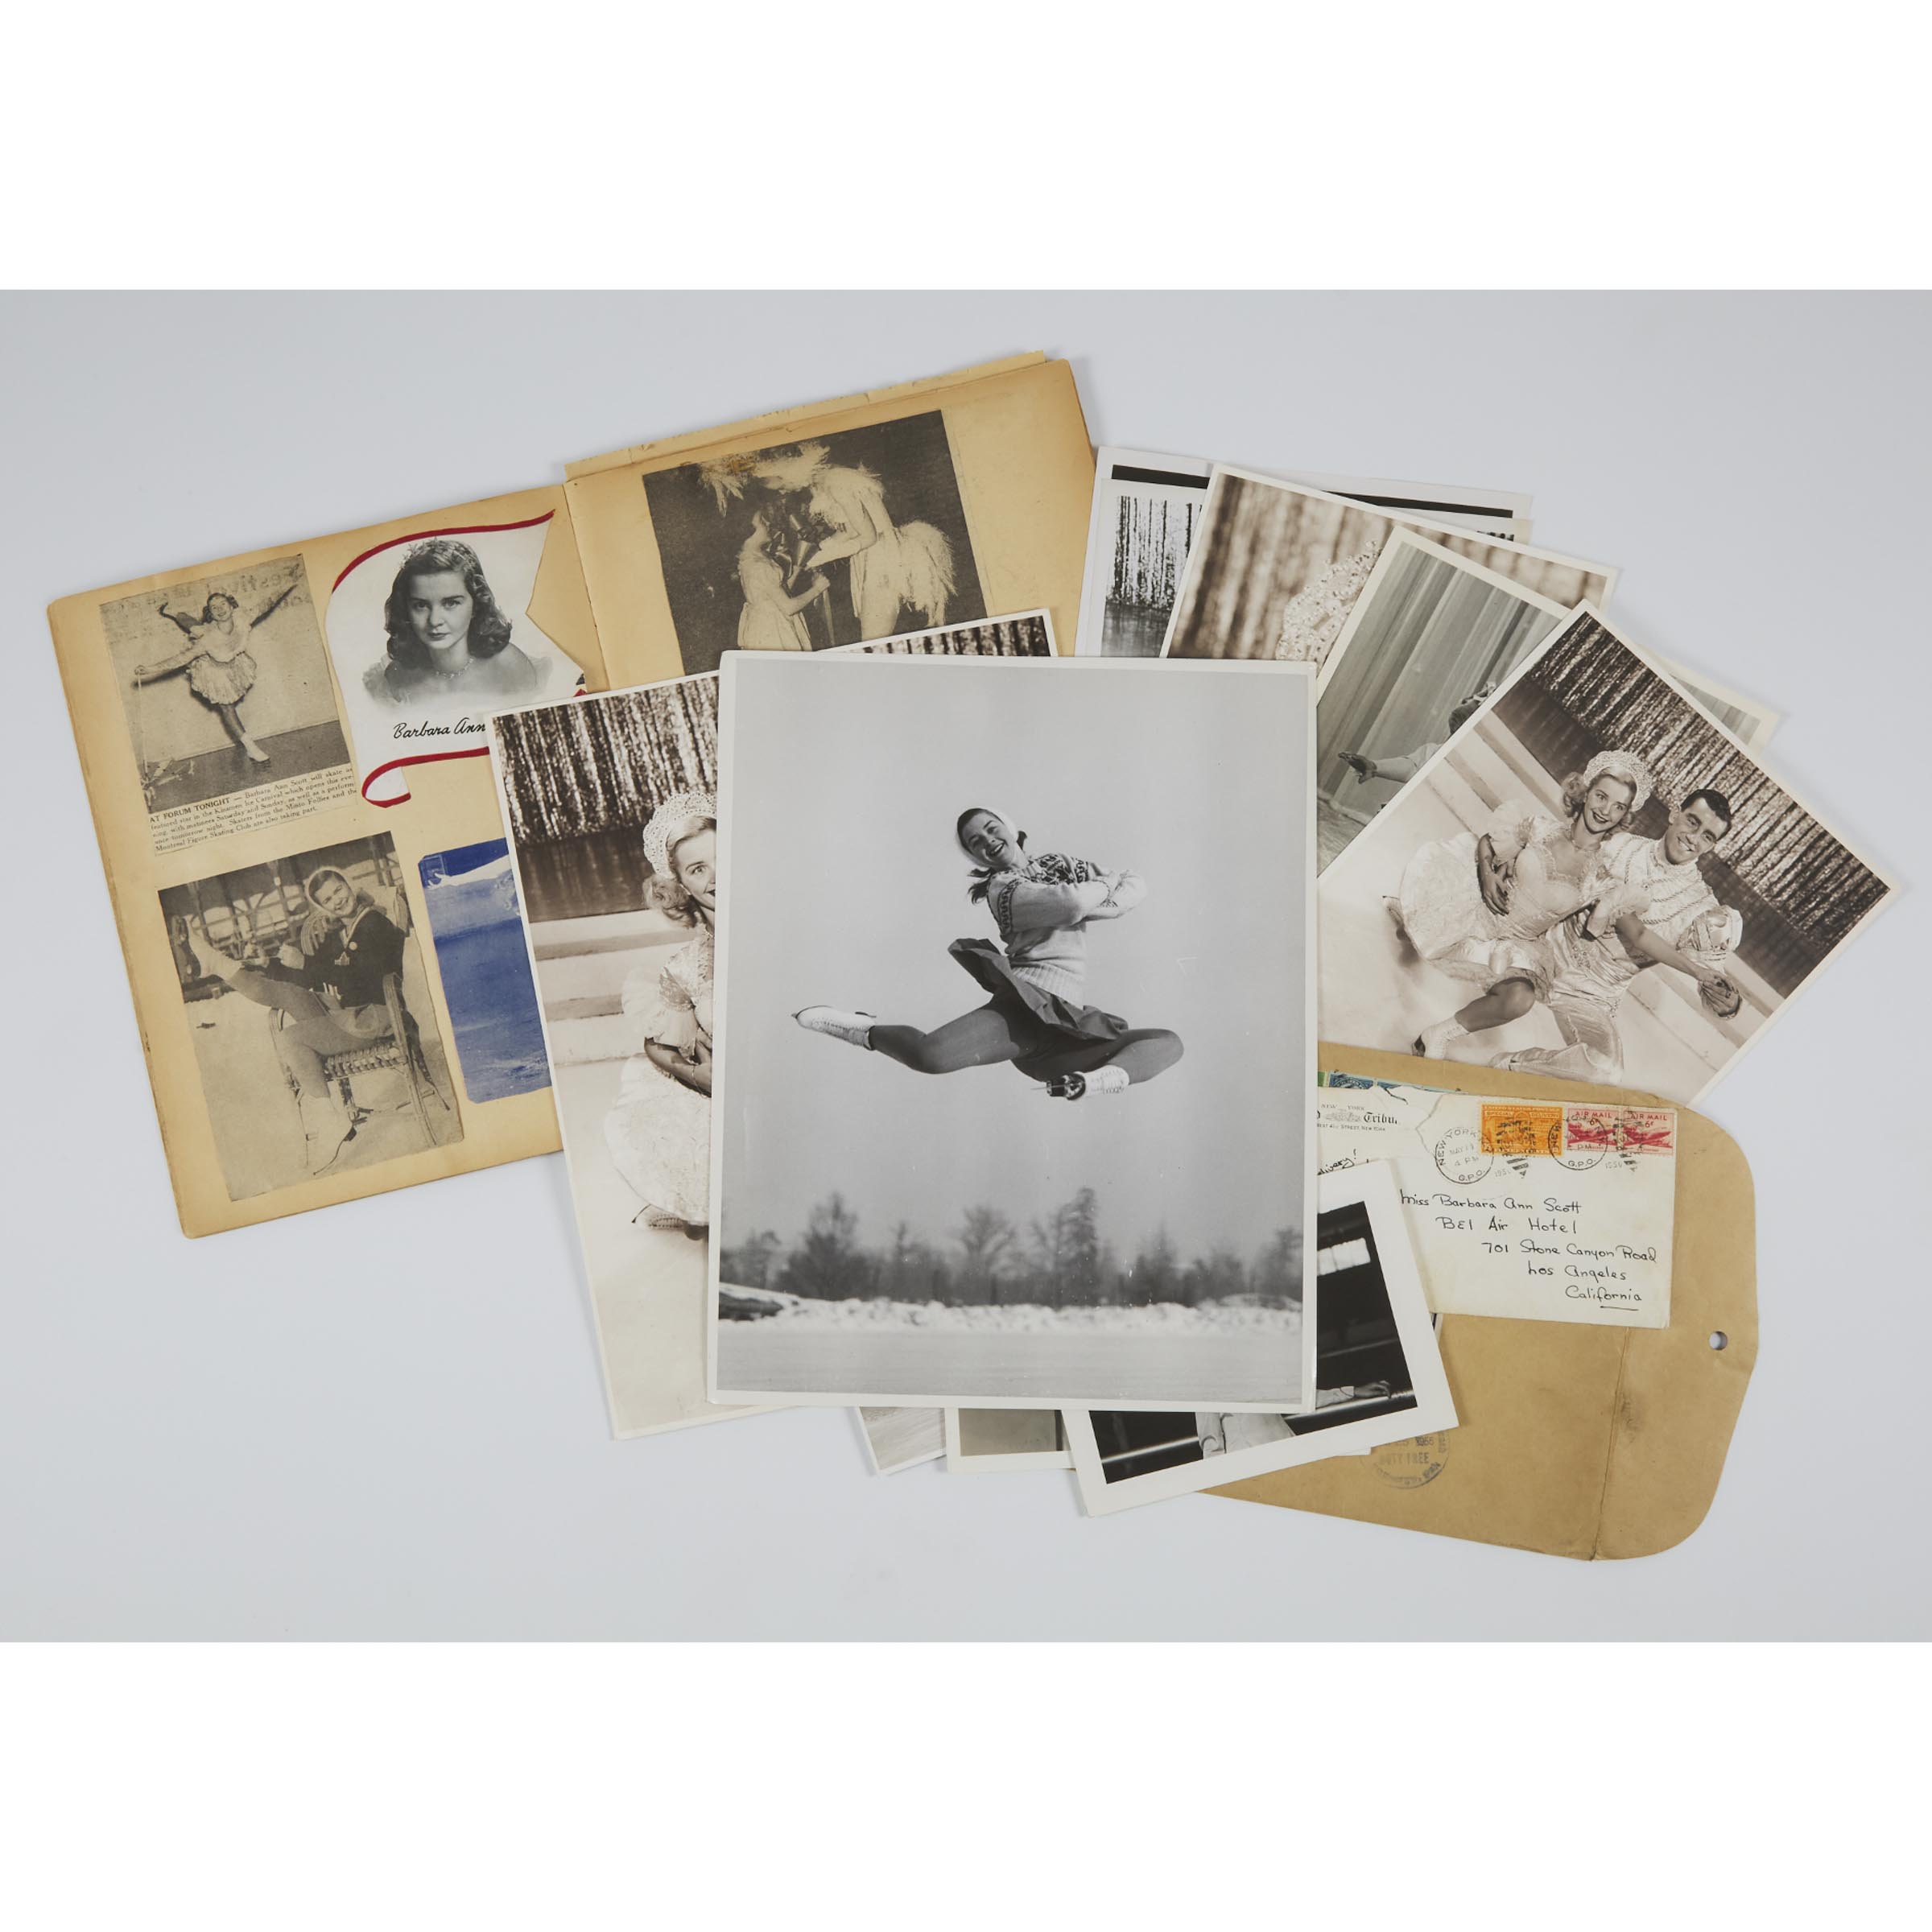 Mary Purves Scott's Archive of Photographs of Barbara Ann Scott (1928-2012)